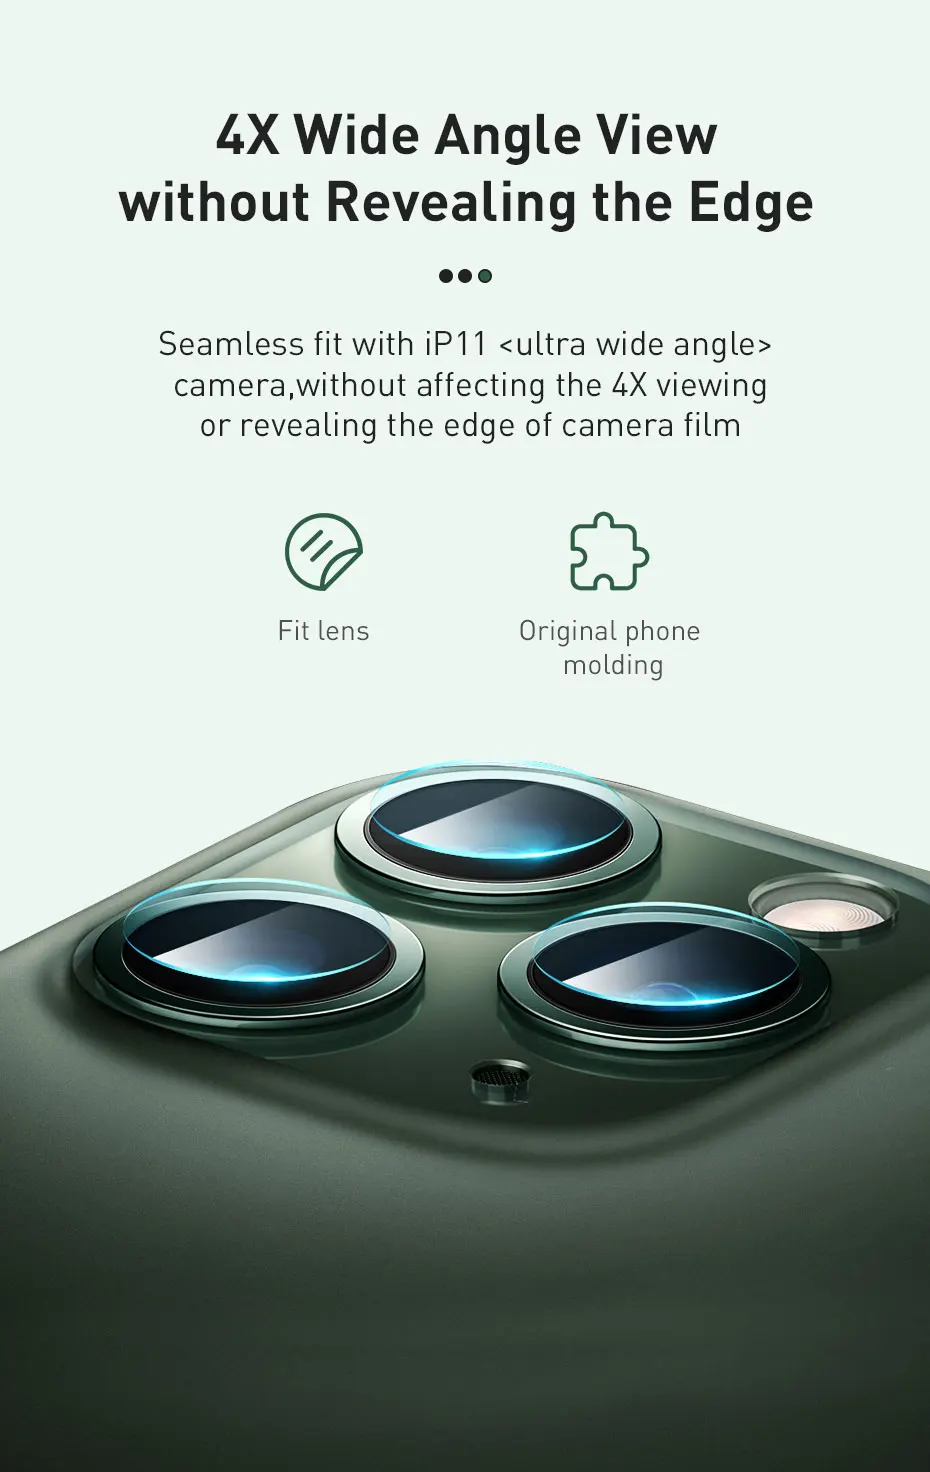 Baseus 0,15 мм прозрачное стекло для объектива камеры мягкая защитная водонепроницаемая пленка для iPhone 11 Pro Max